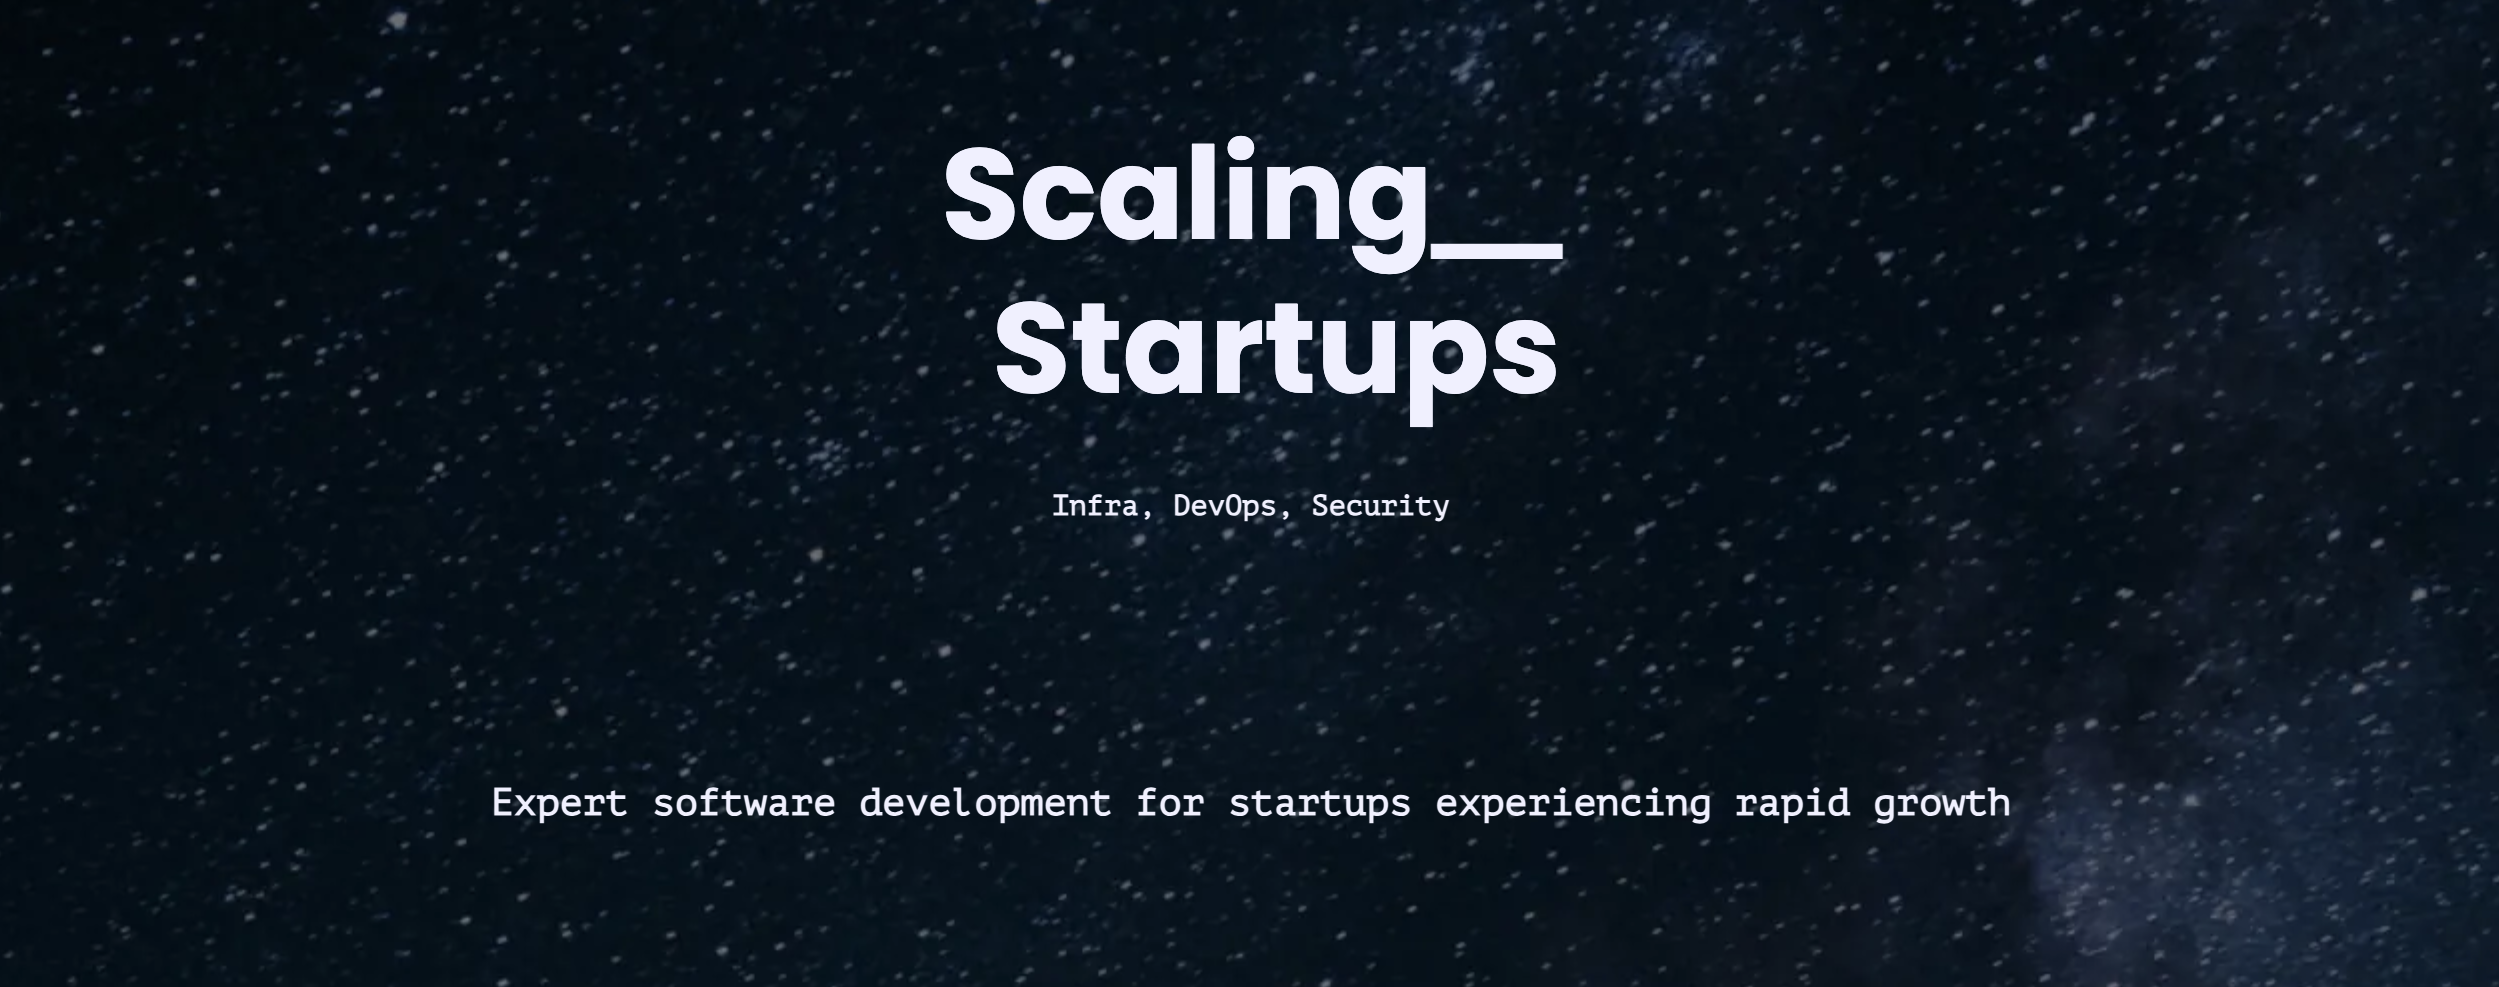 Scaling Startups Screenshot